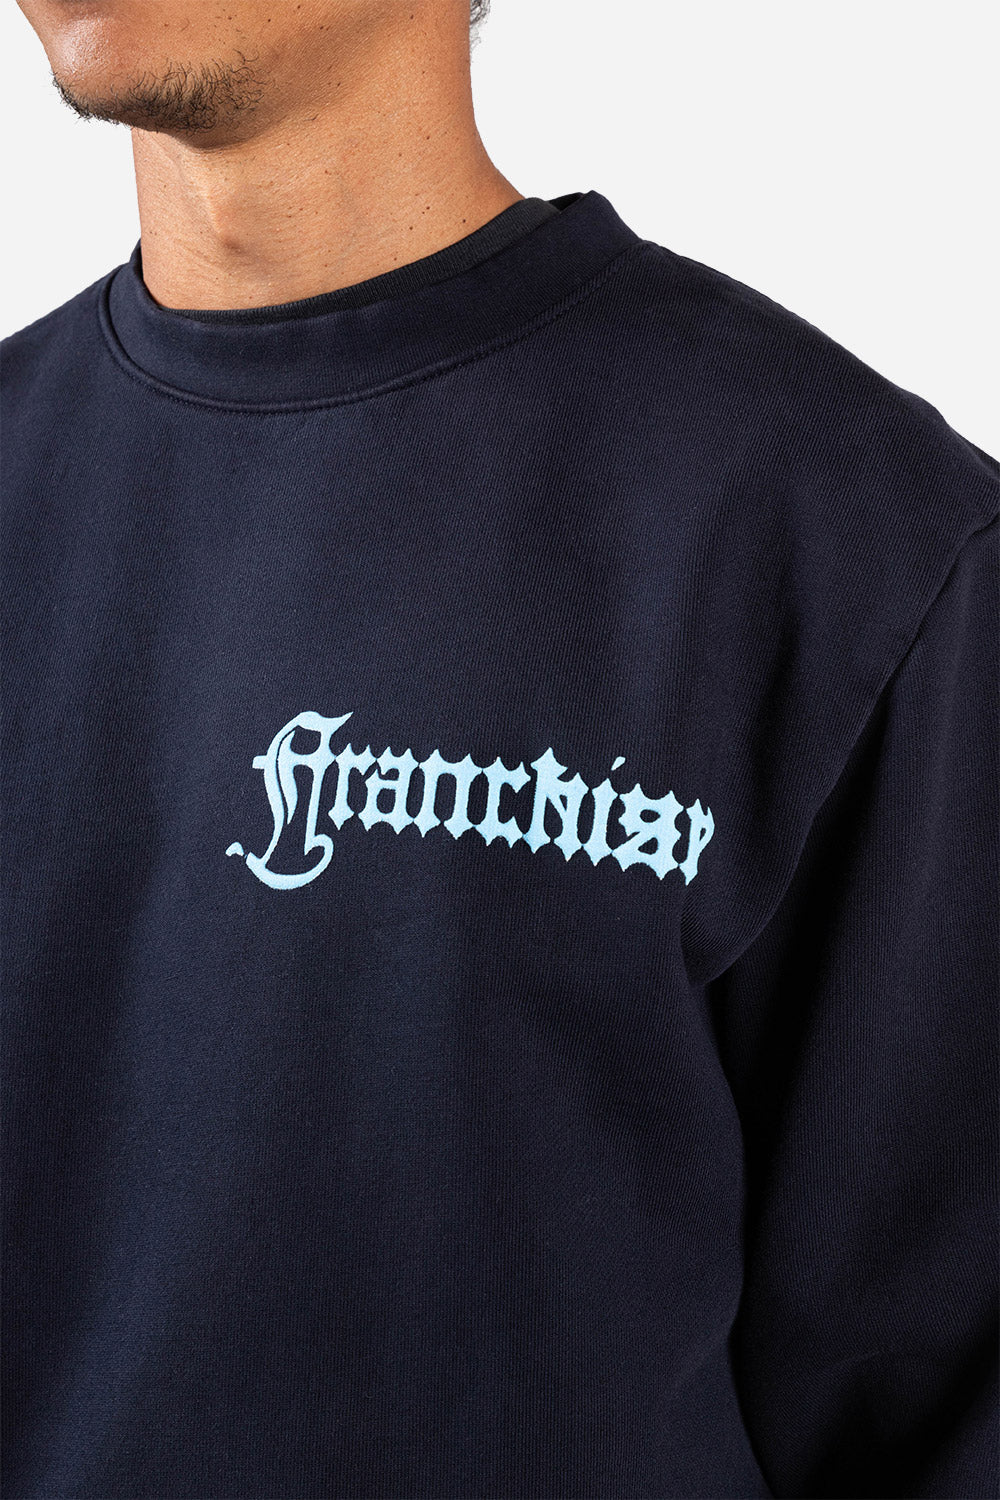 franchise-biometrics-sweatshirt-navy